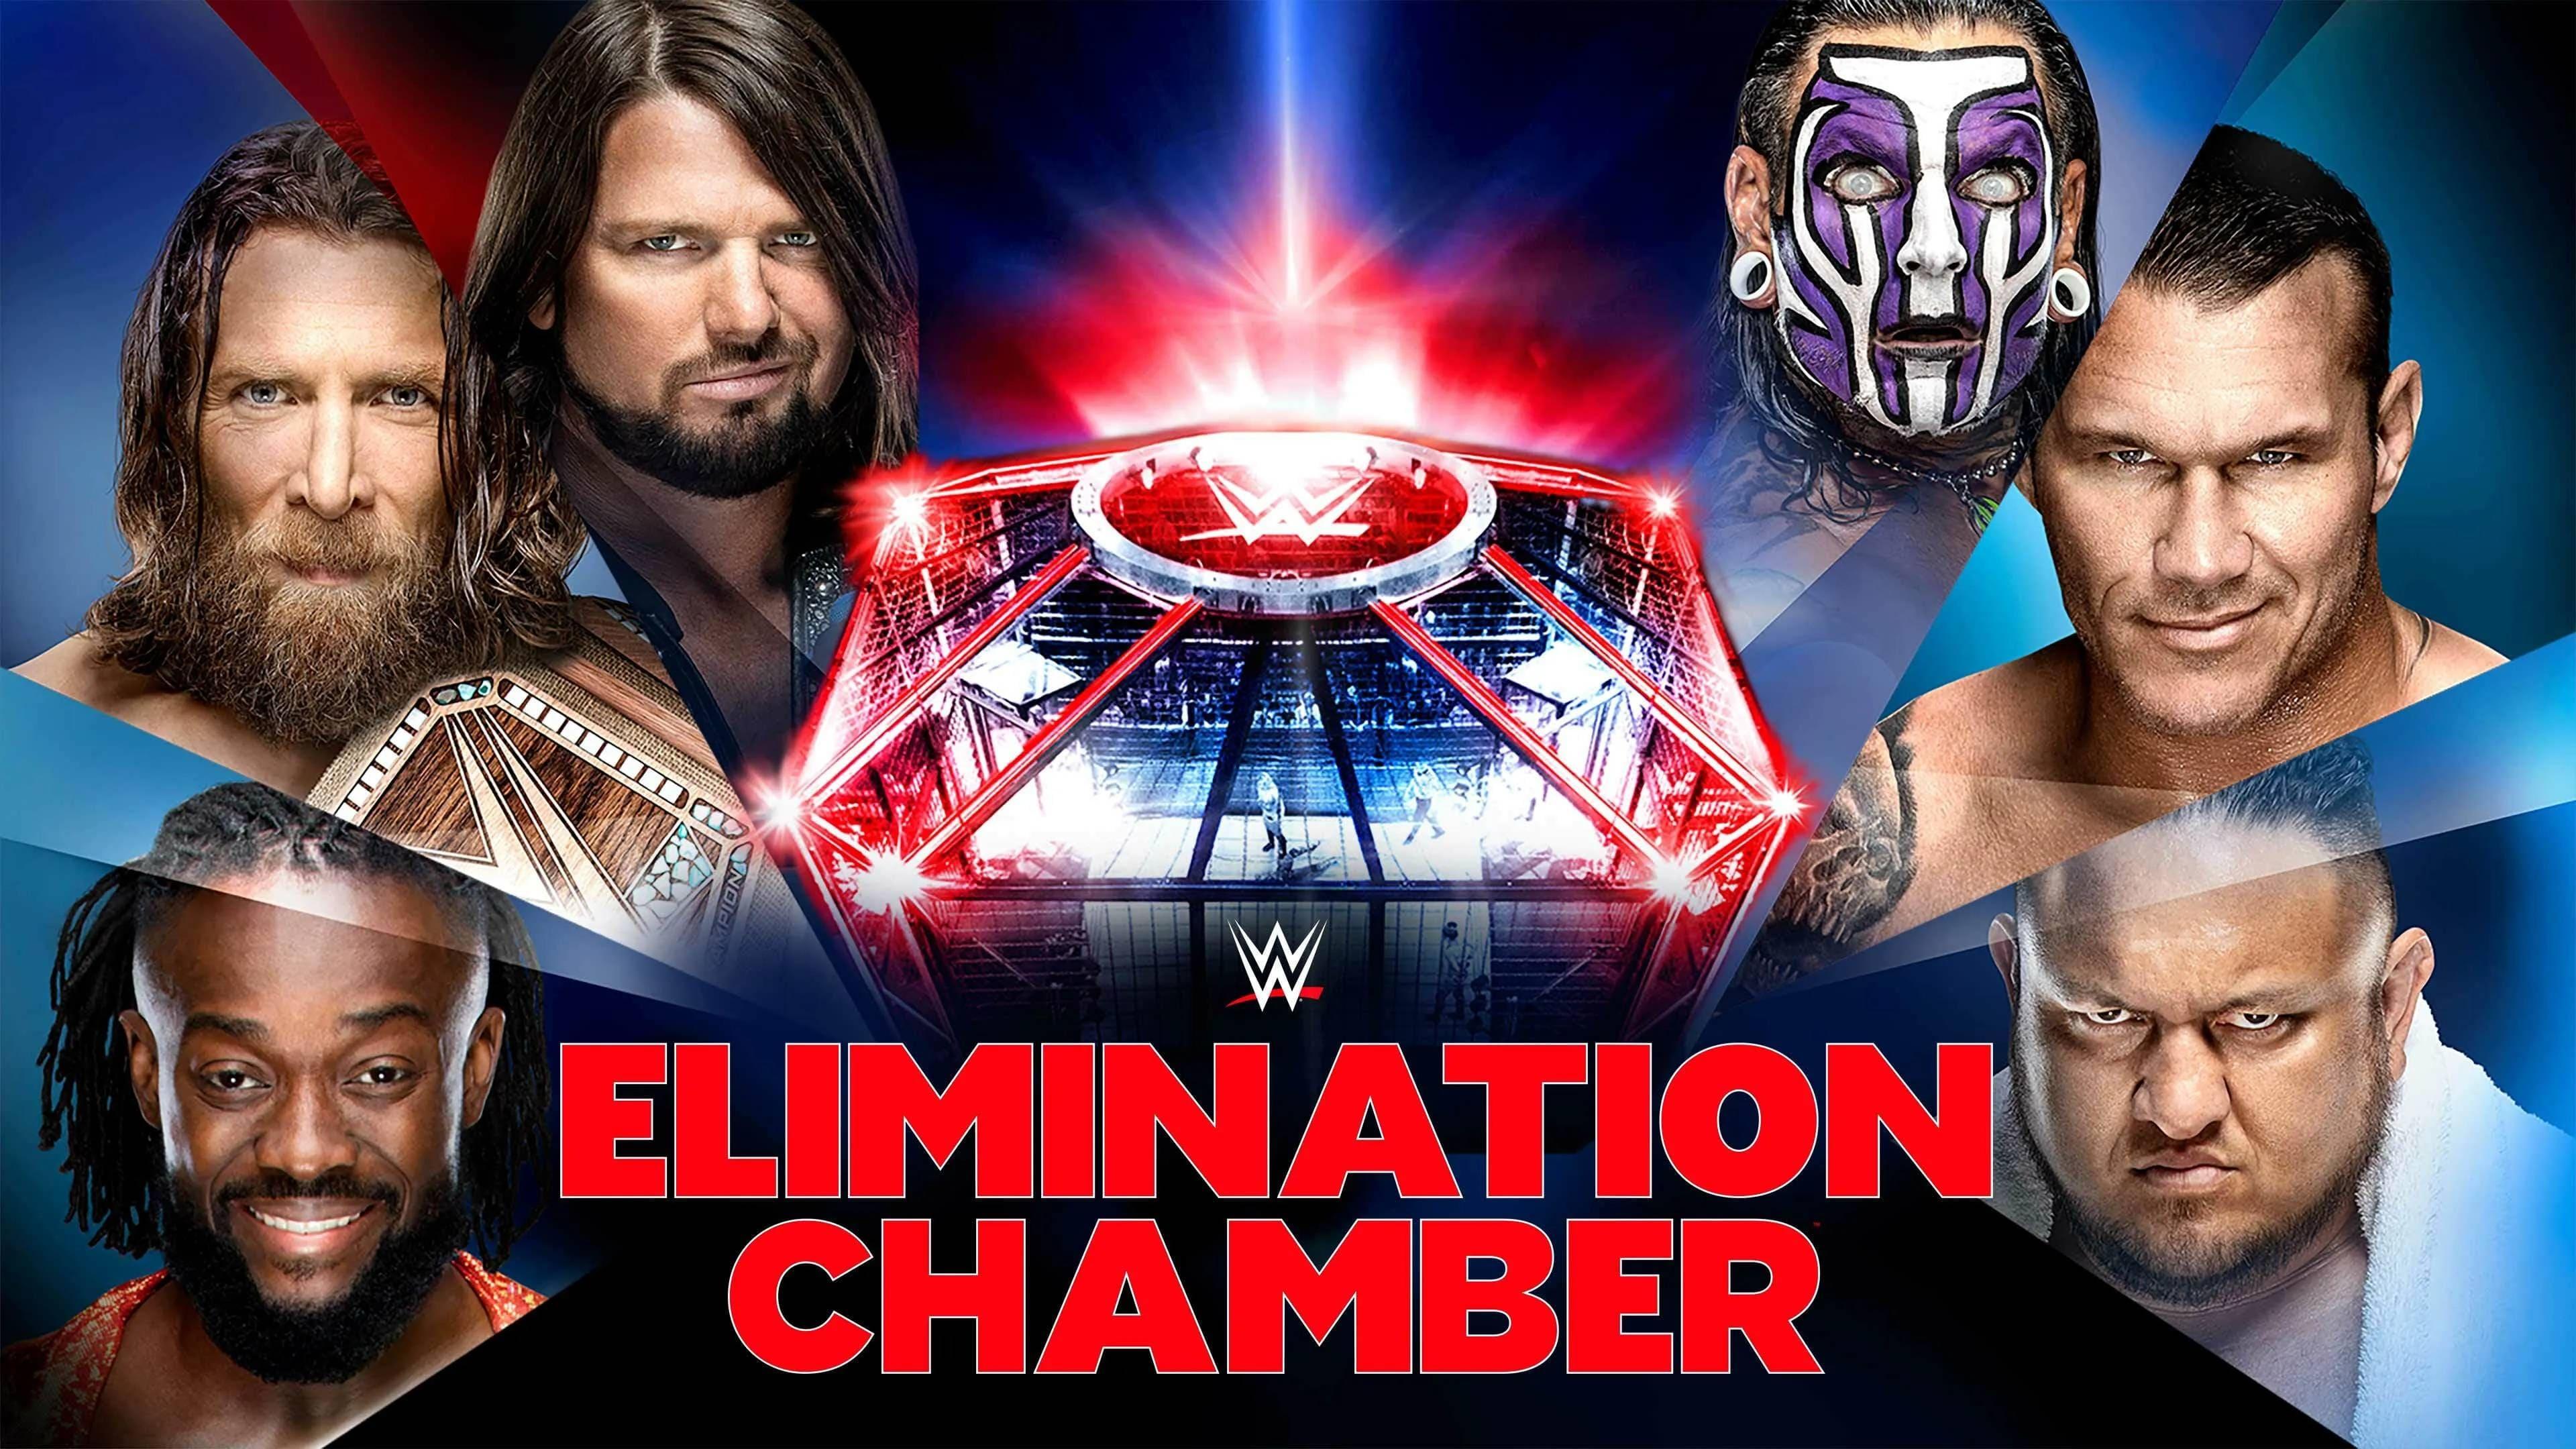 WWE Elimination Chamber 2019 backdrop